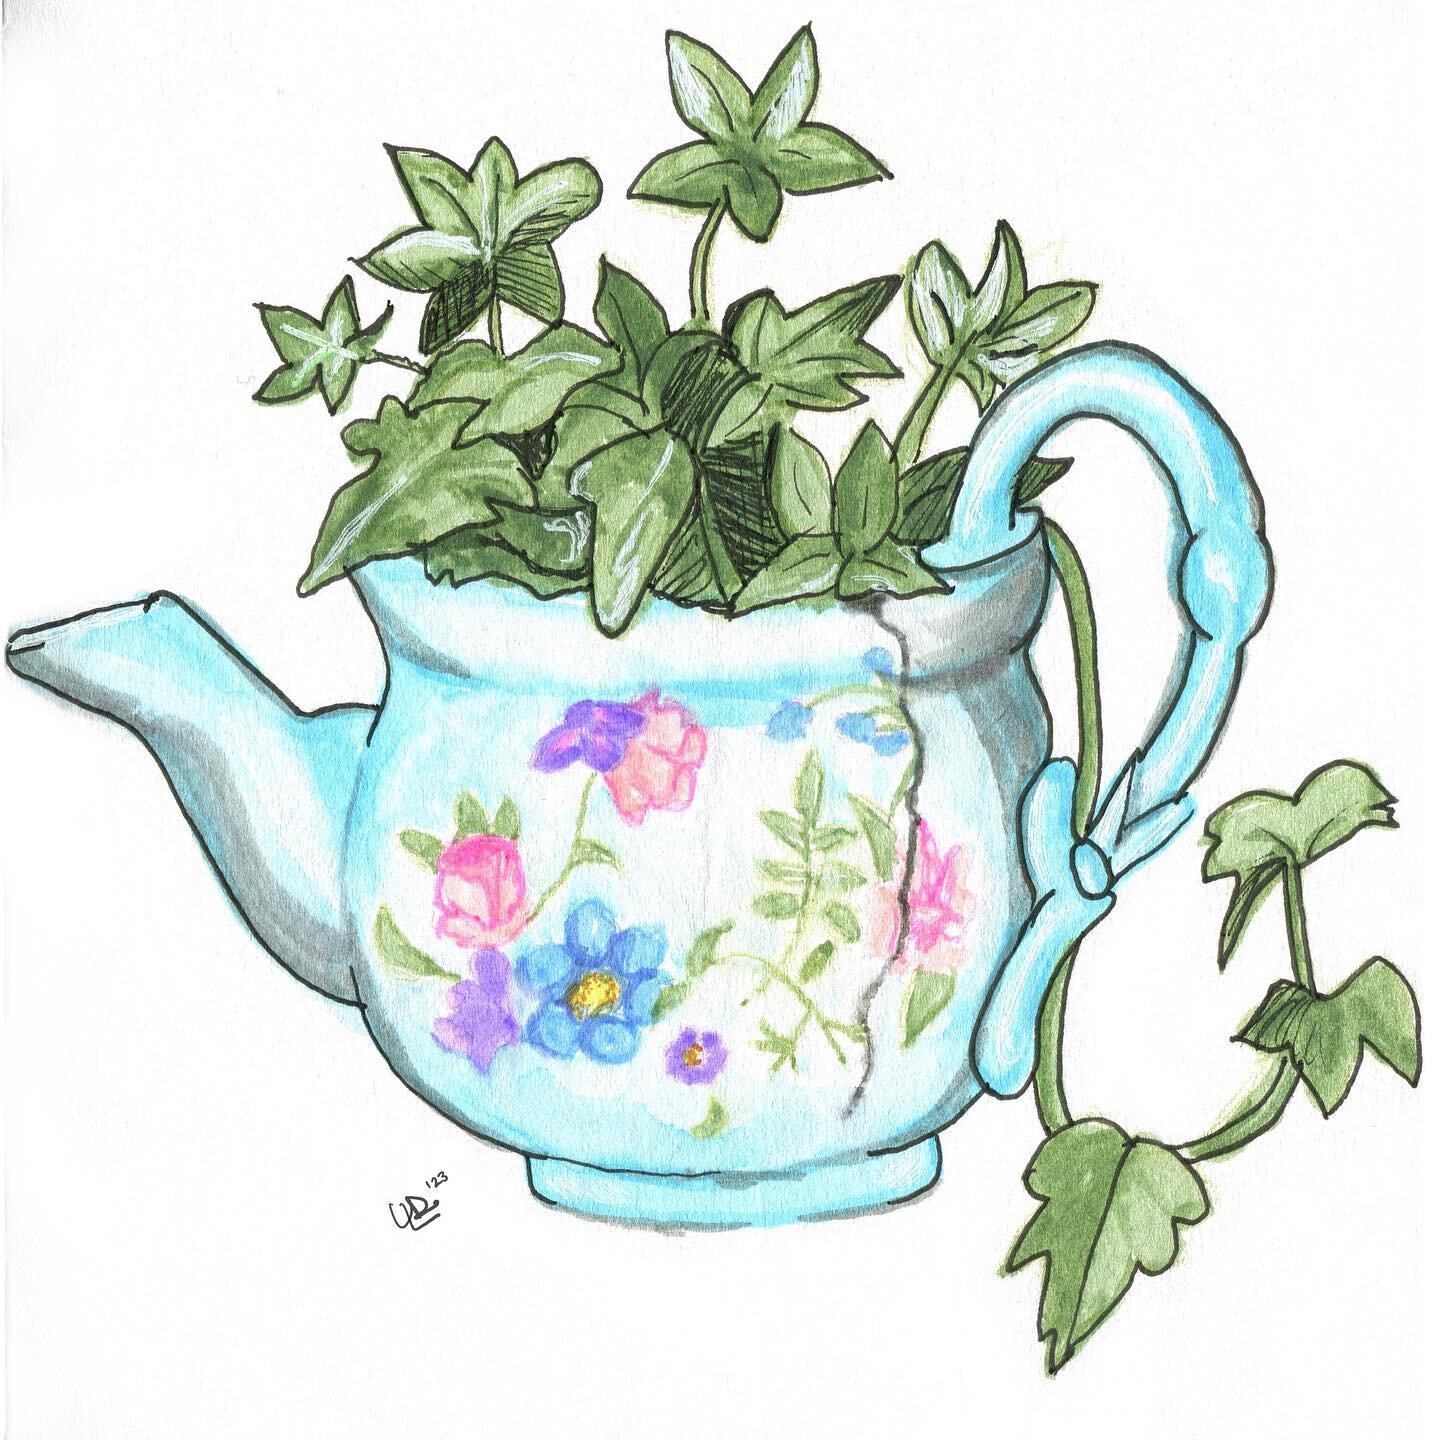 ✨🪴🫖🌸✨
.
.
.
.
.
.
.
.
.
.
#artistsofinstagram #illustration #illustrator #watercolormarkers #teapot #ivy #newenglandartist #sketchbook #botanicalart #artoftheday #mixedmedia #sketch #artsupporters #art #drawing #artwork #watercolor #illustratorson